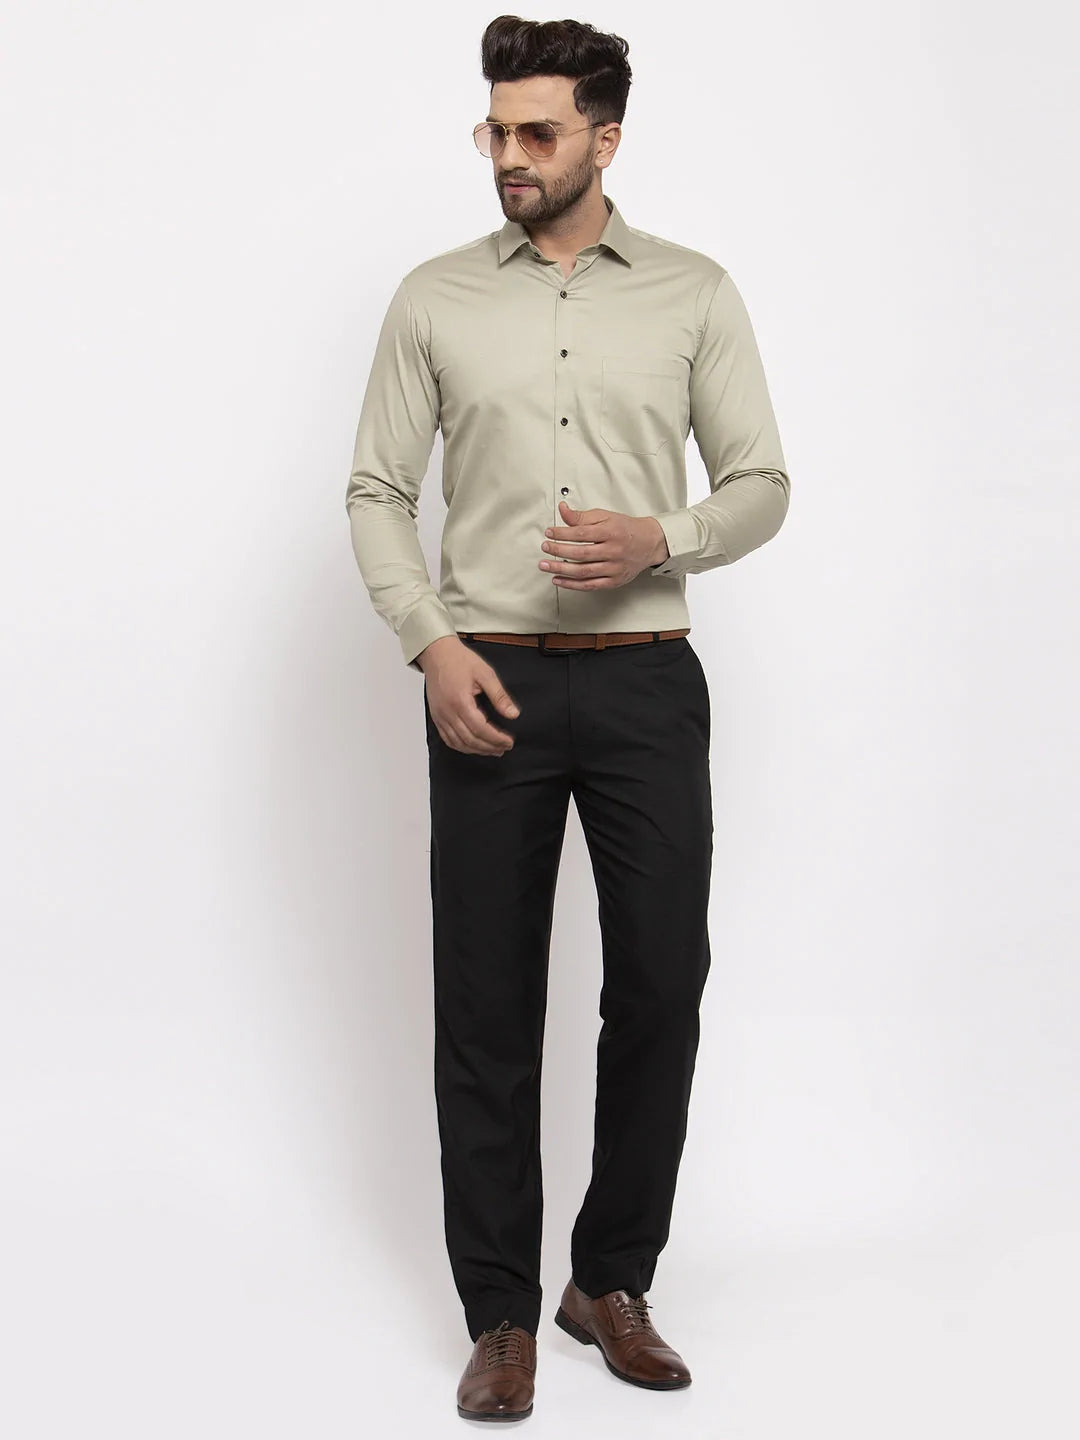 Jainish Silver Men's Cotton Solid Formal Shirt's ( SF 768Steel-Grey )